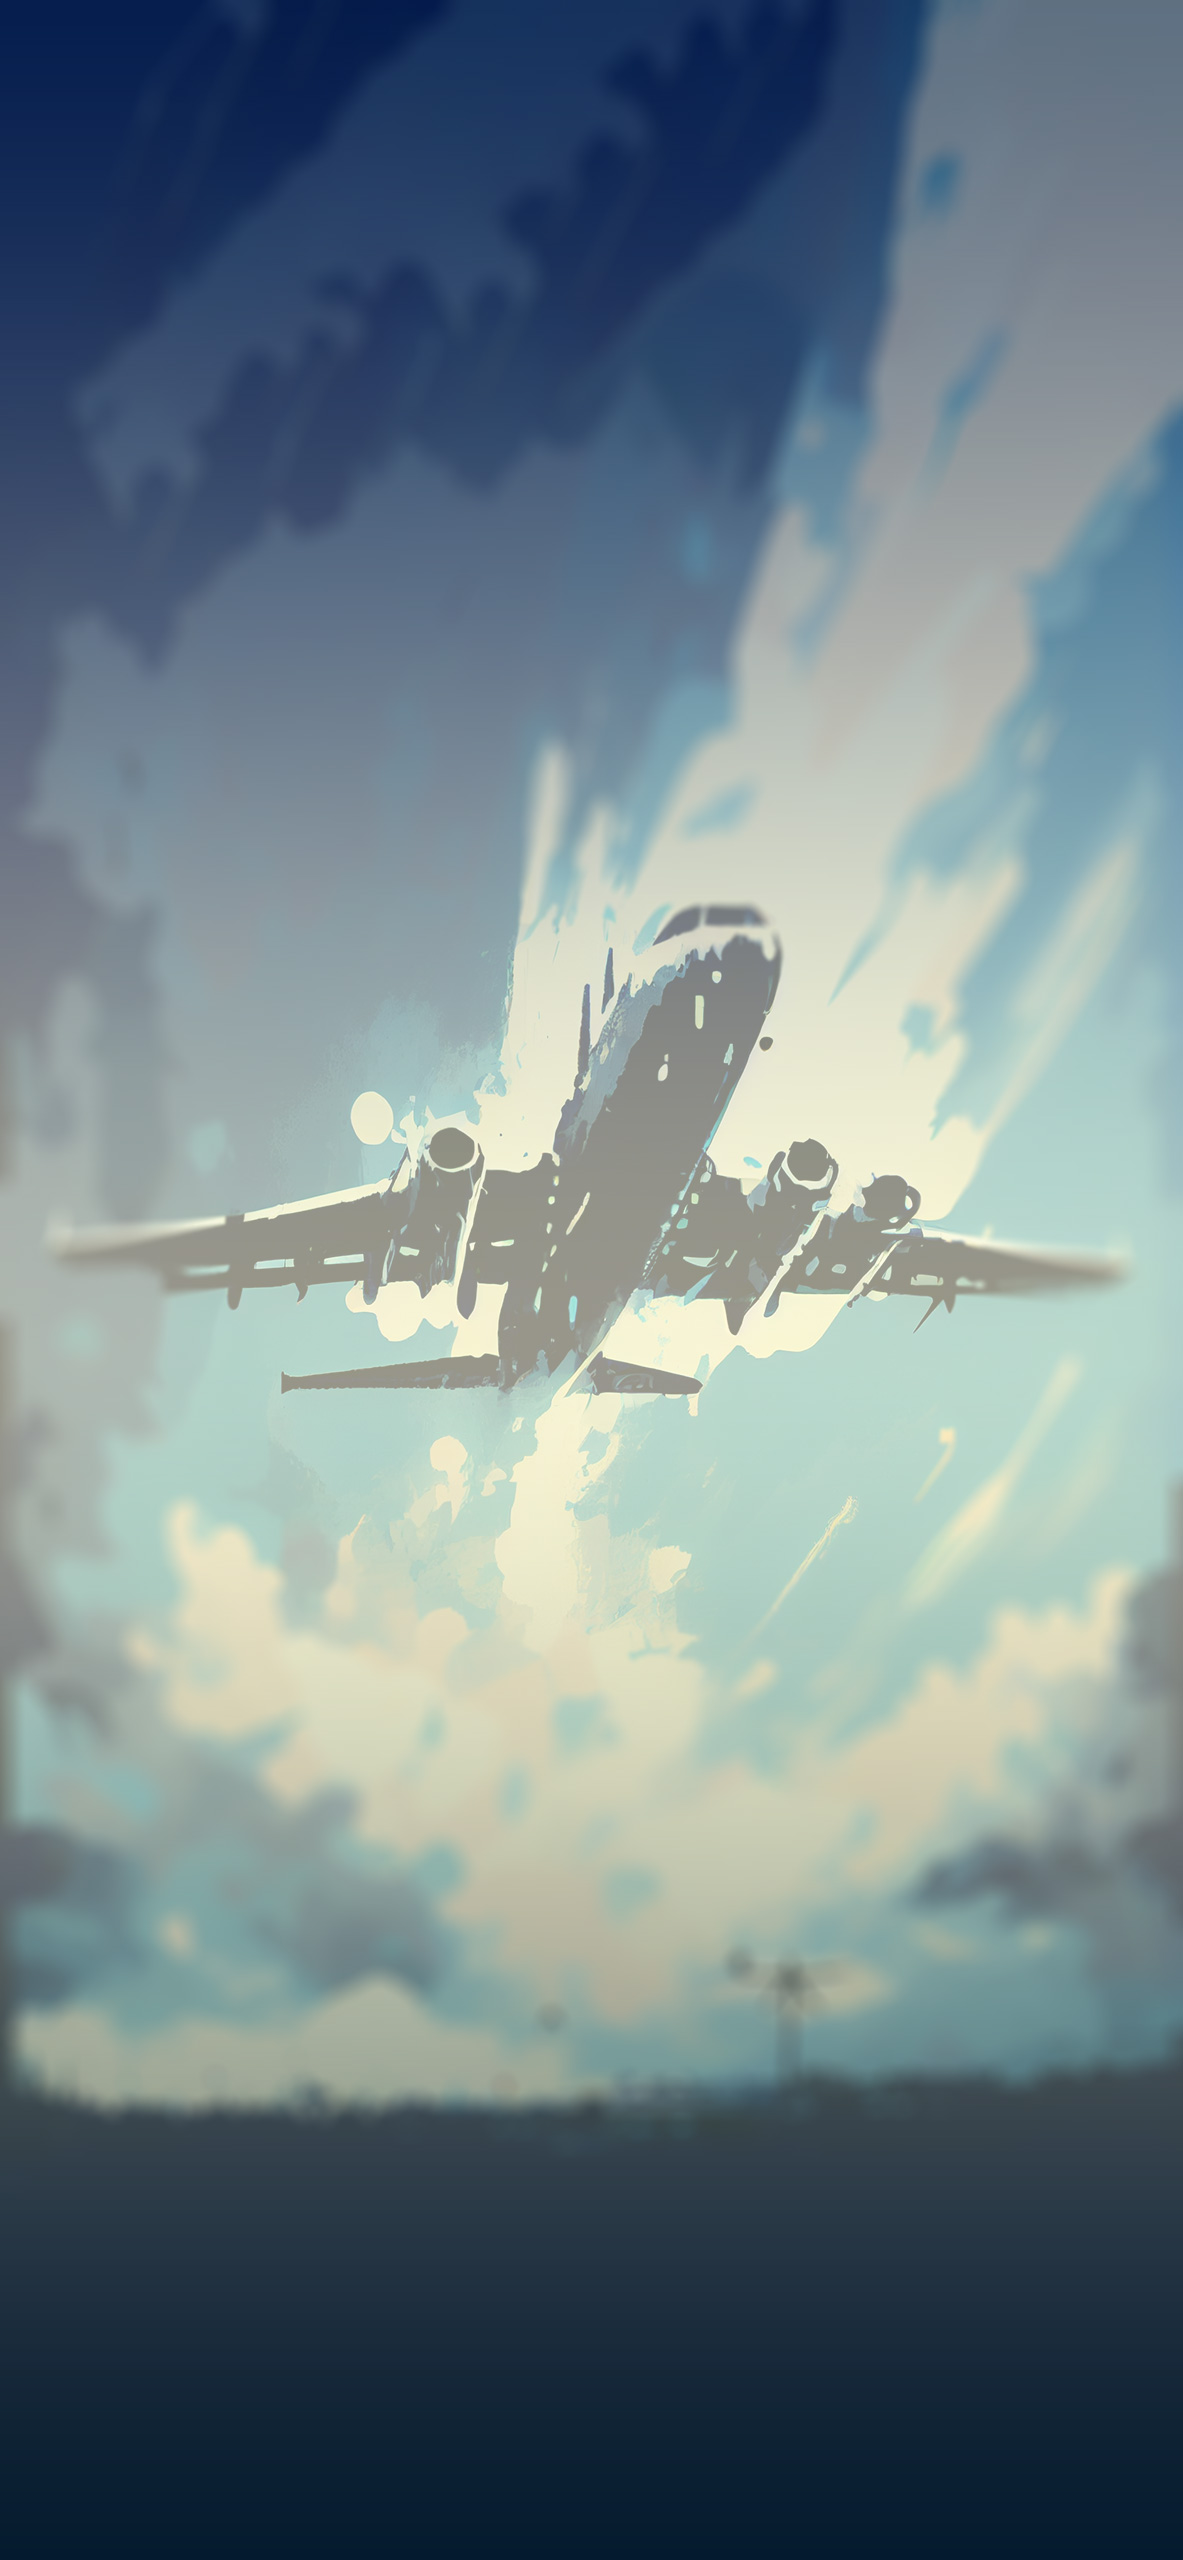 Airplane in Sky Art Wallpaper - Airplane Aesthetic Wallpaper iPhone